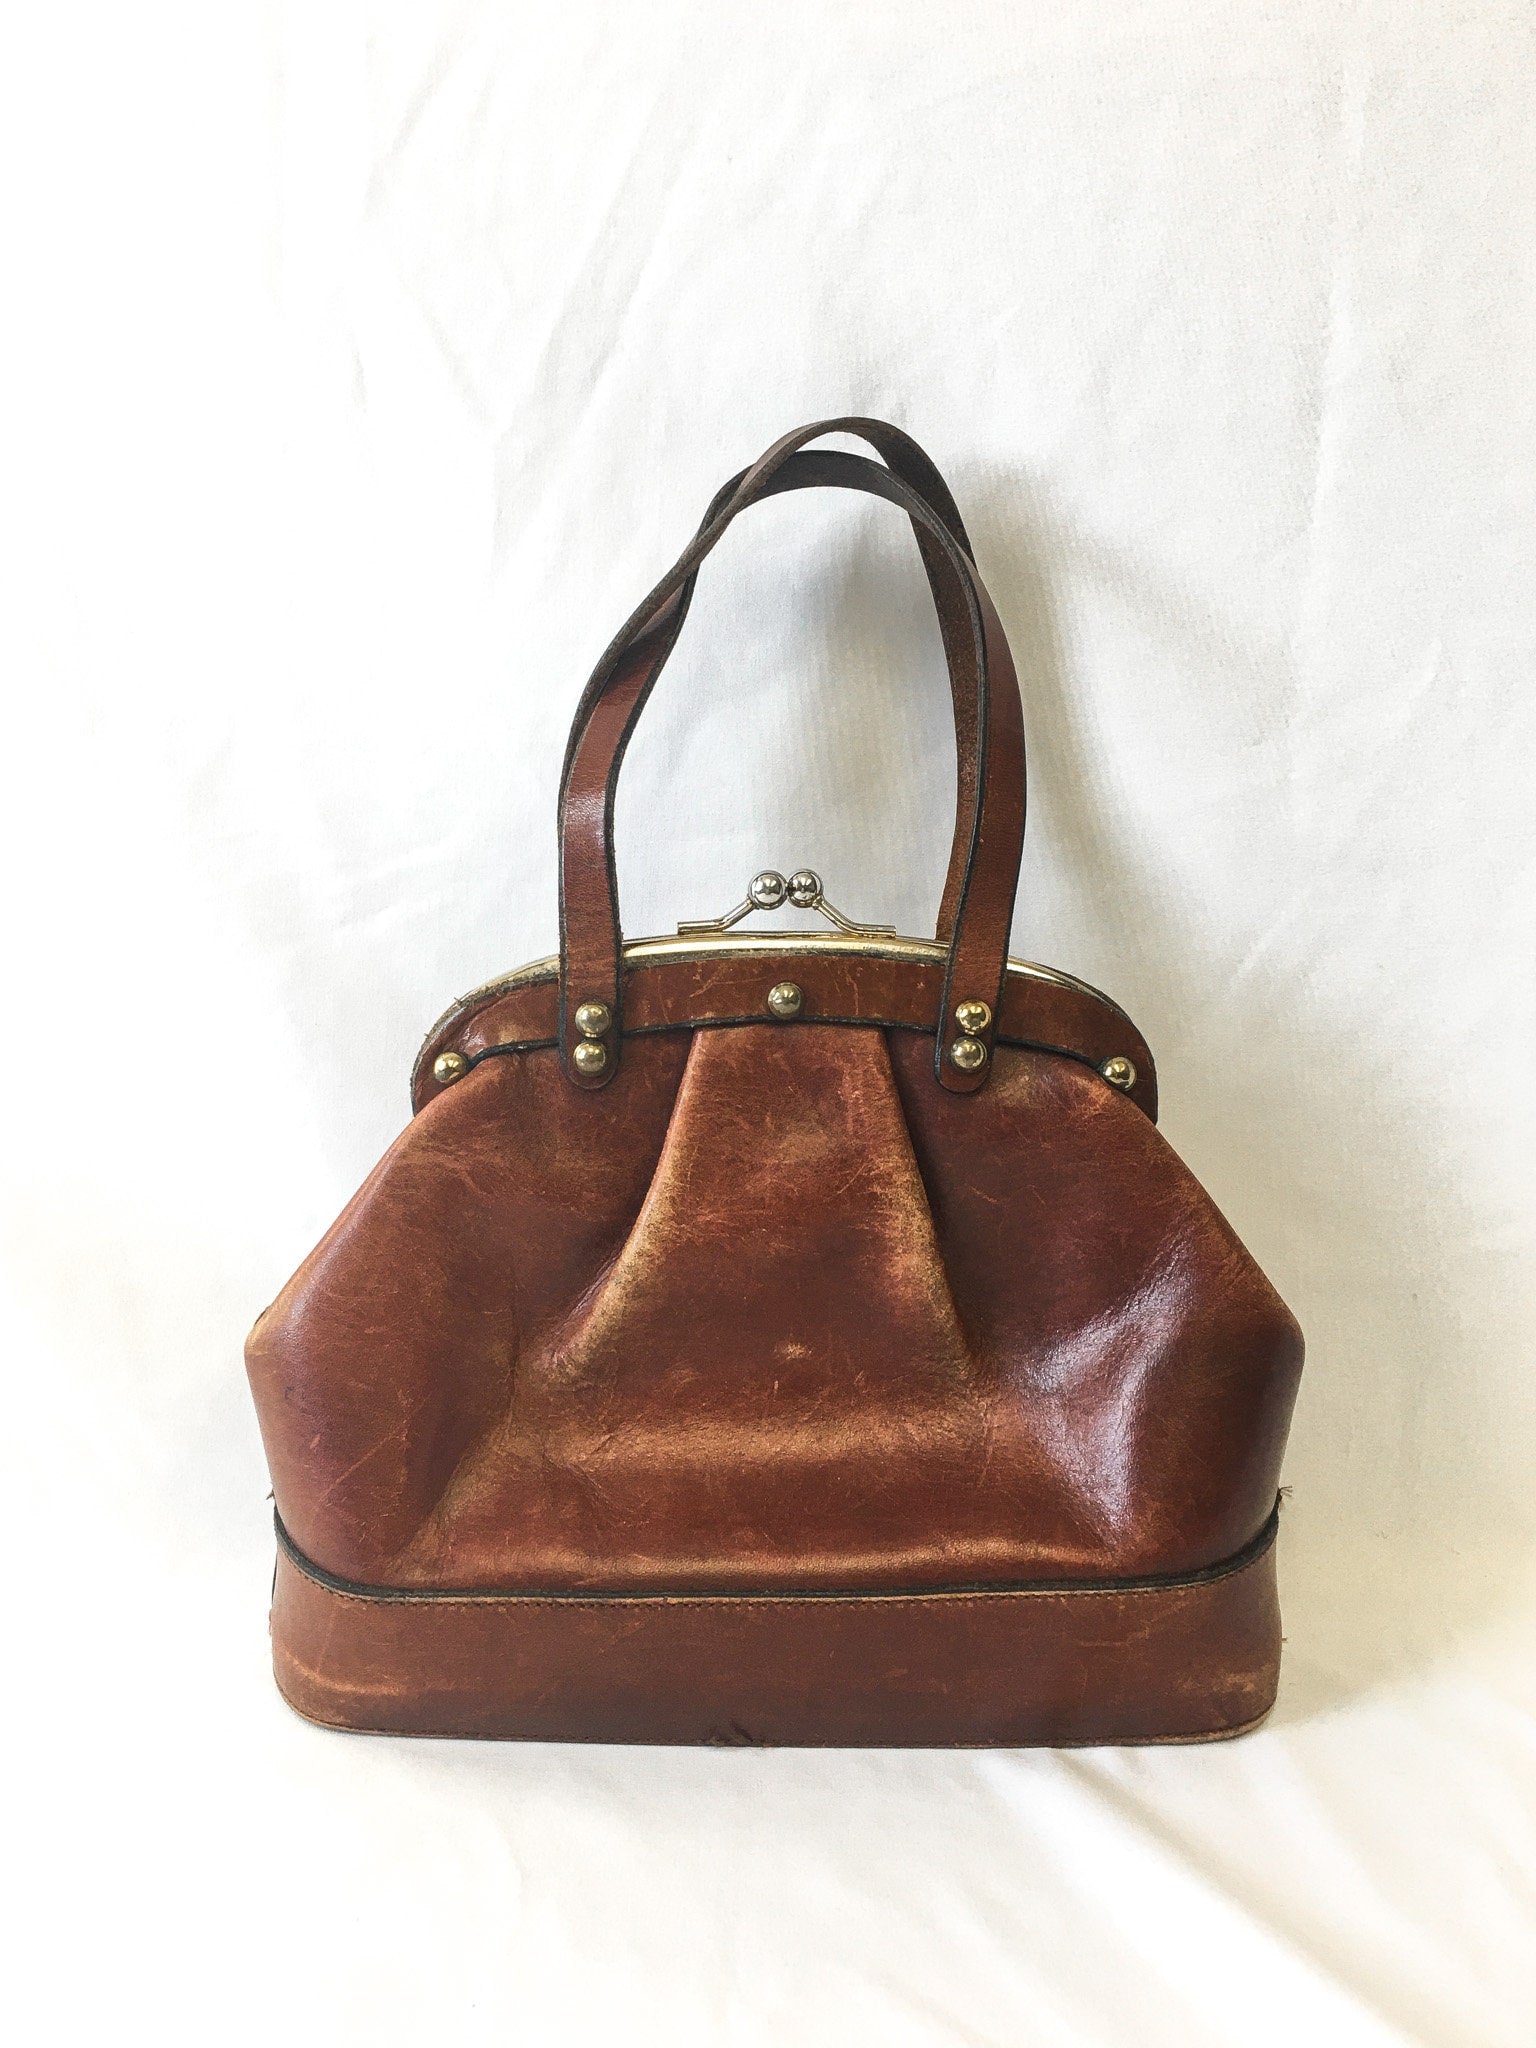 Vintage 60s Etienne Aigner Handmade Brown Leather Top Handle Satchel, 60s Leather Handbag